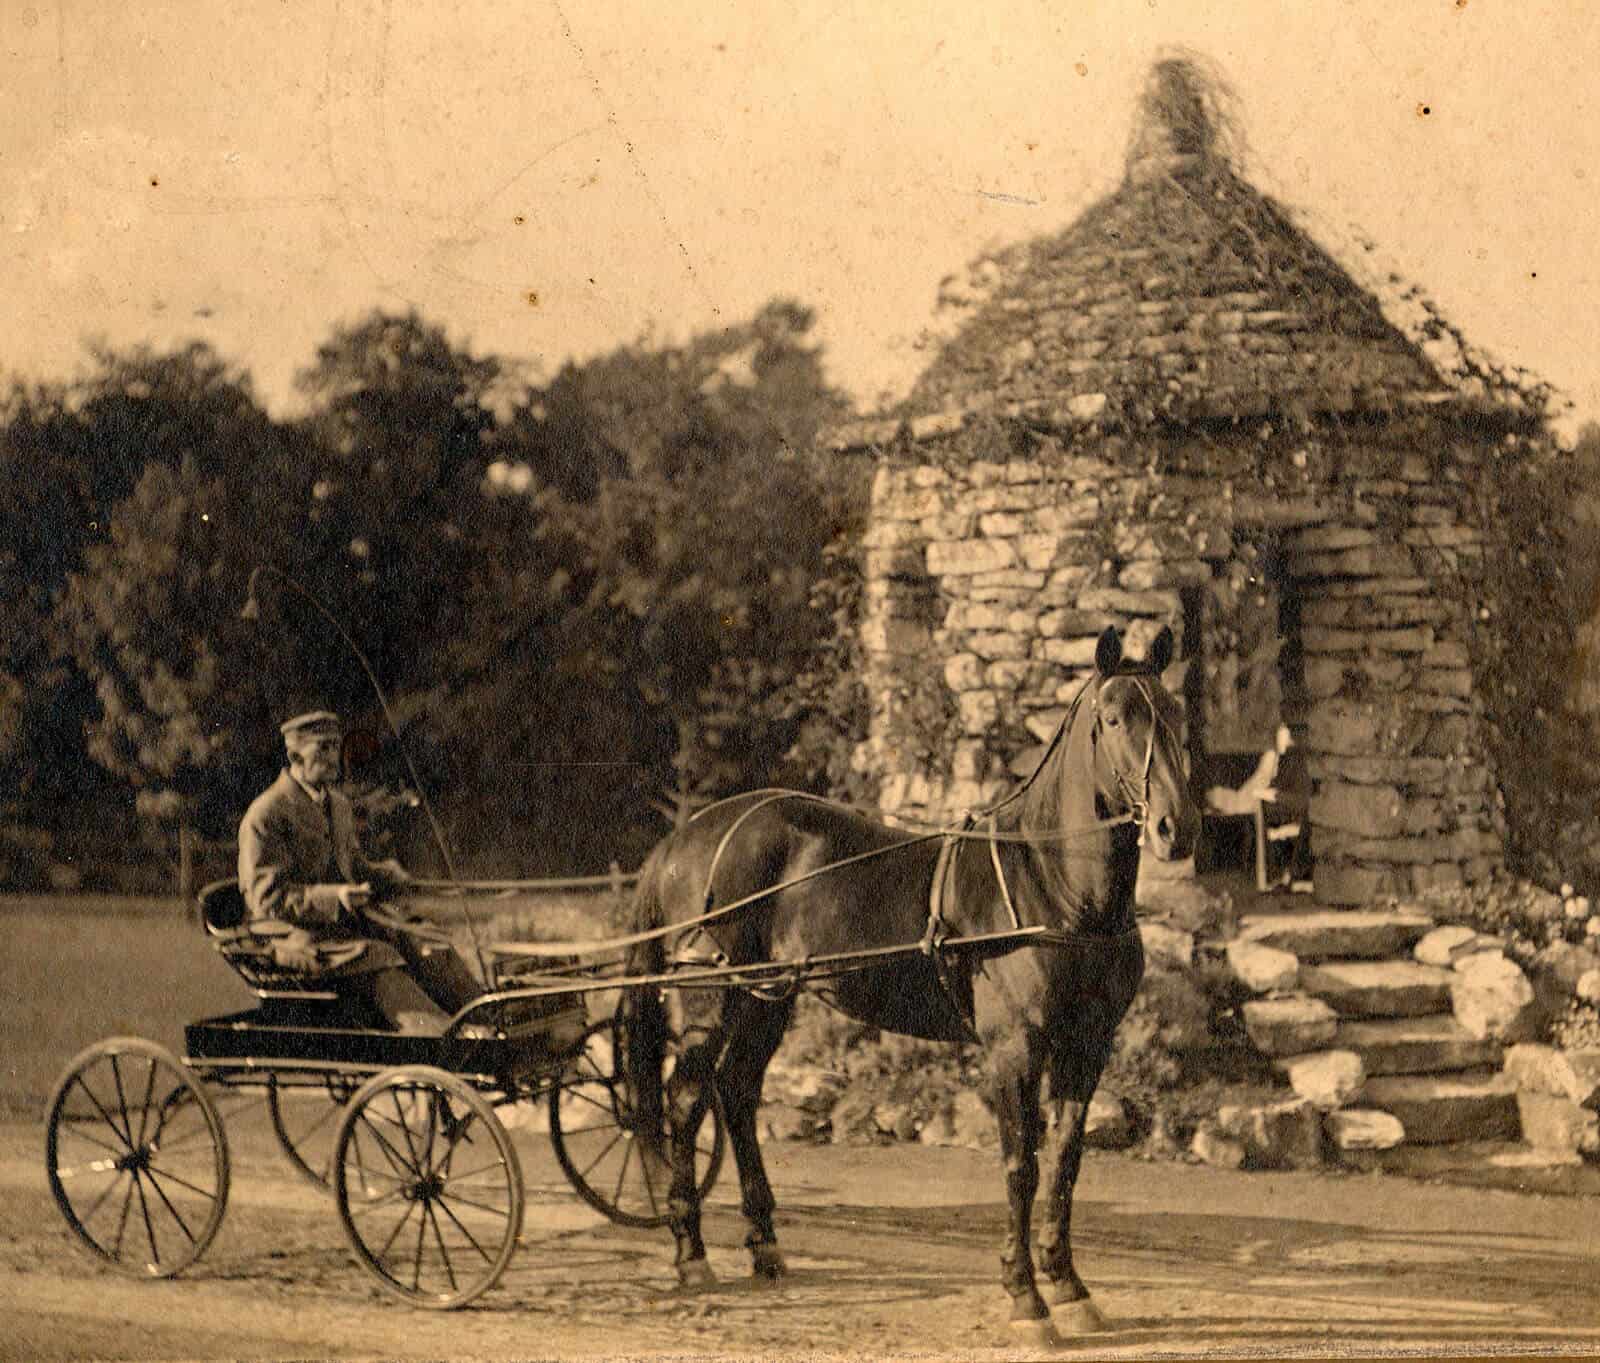 Stone summerhouse at 1900